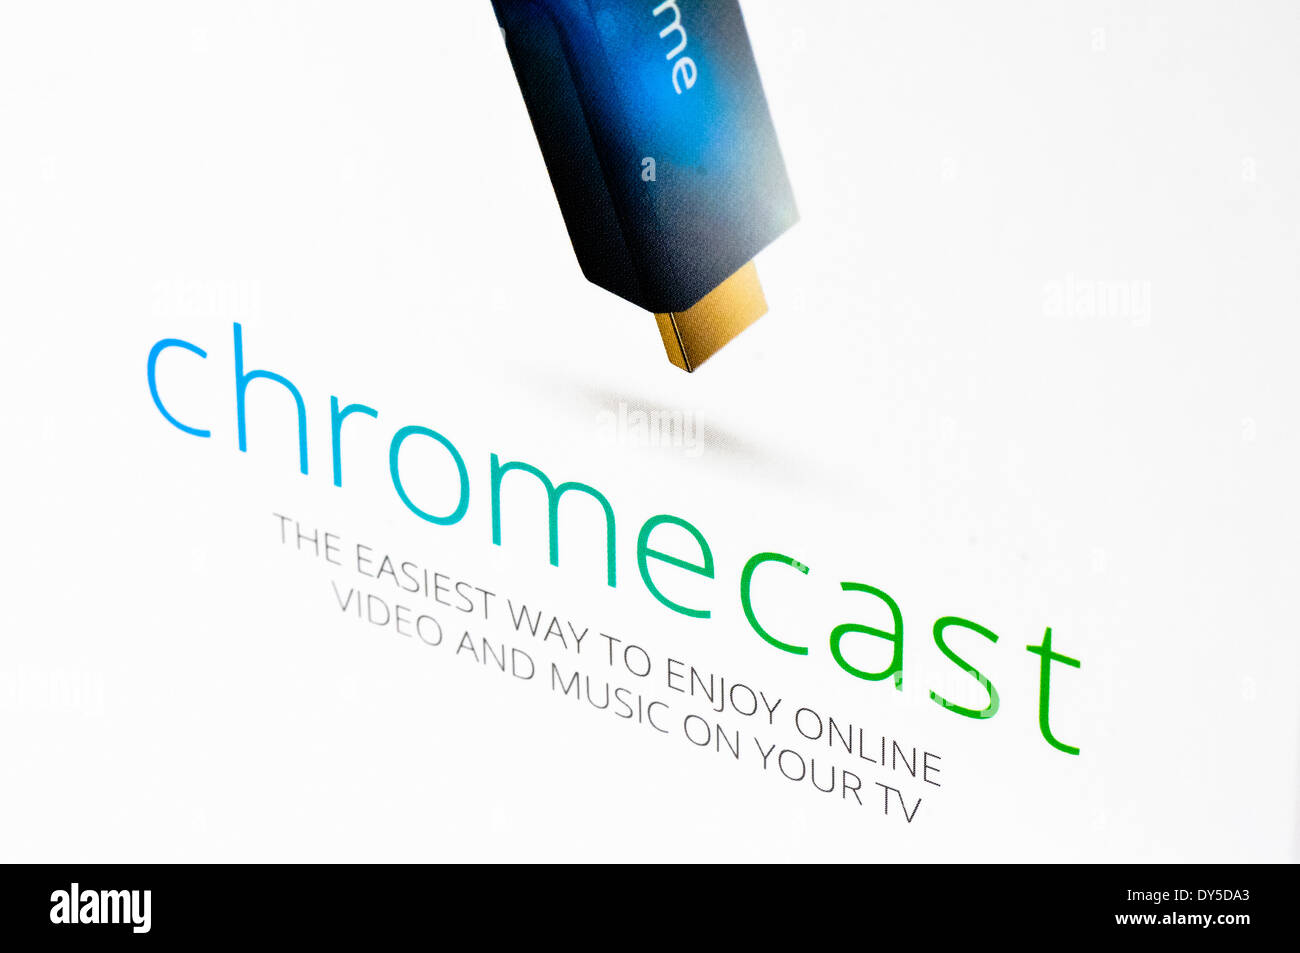 Google Chromecast TV streaming device Alamy